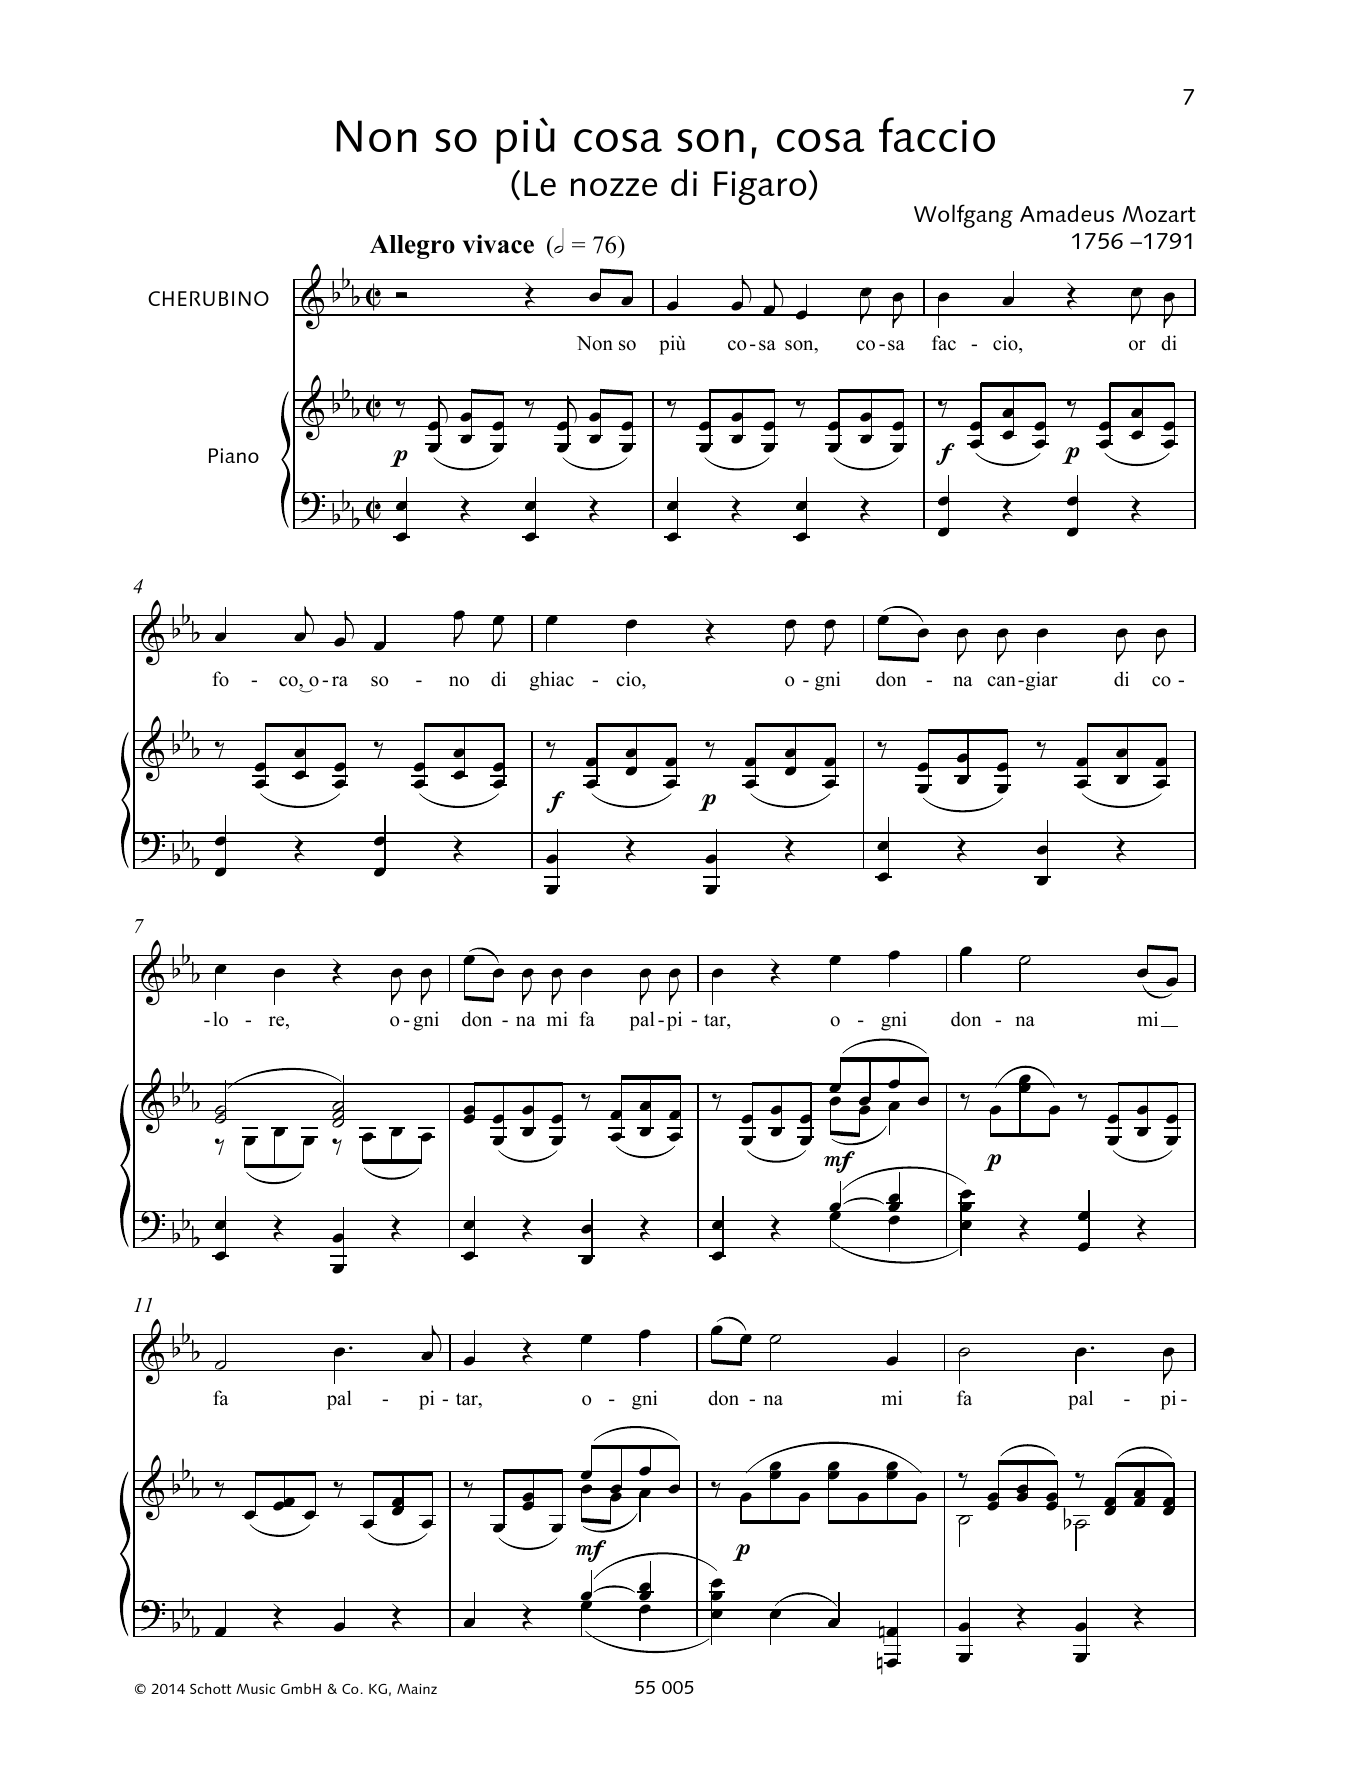 Wolfgang Amadeus Mozart Non so più cosa son, cosa faccio sheet music notes and chords arranged for Piano & Vocal